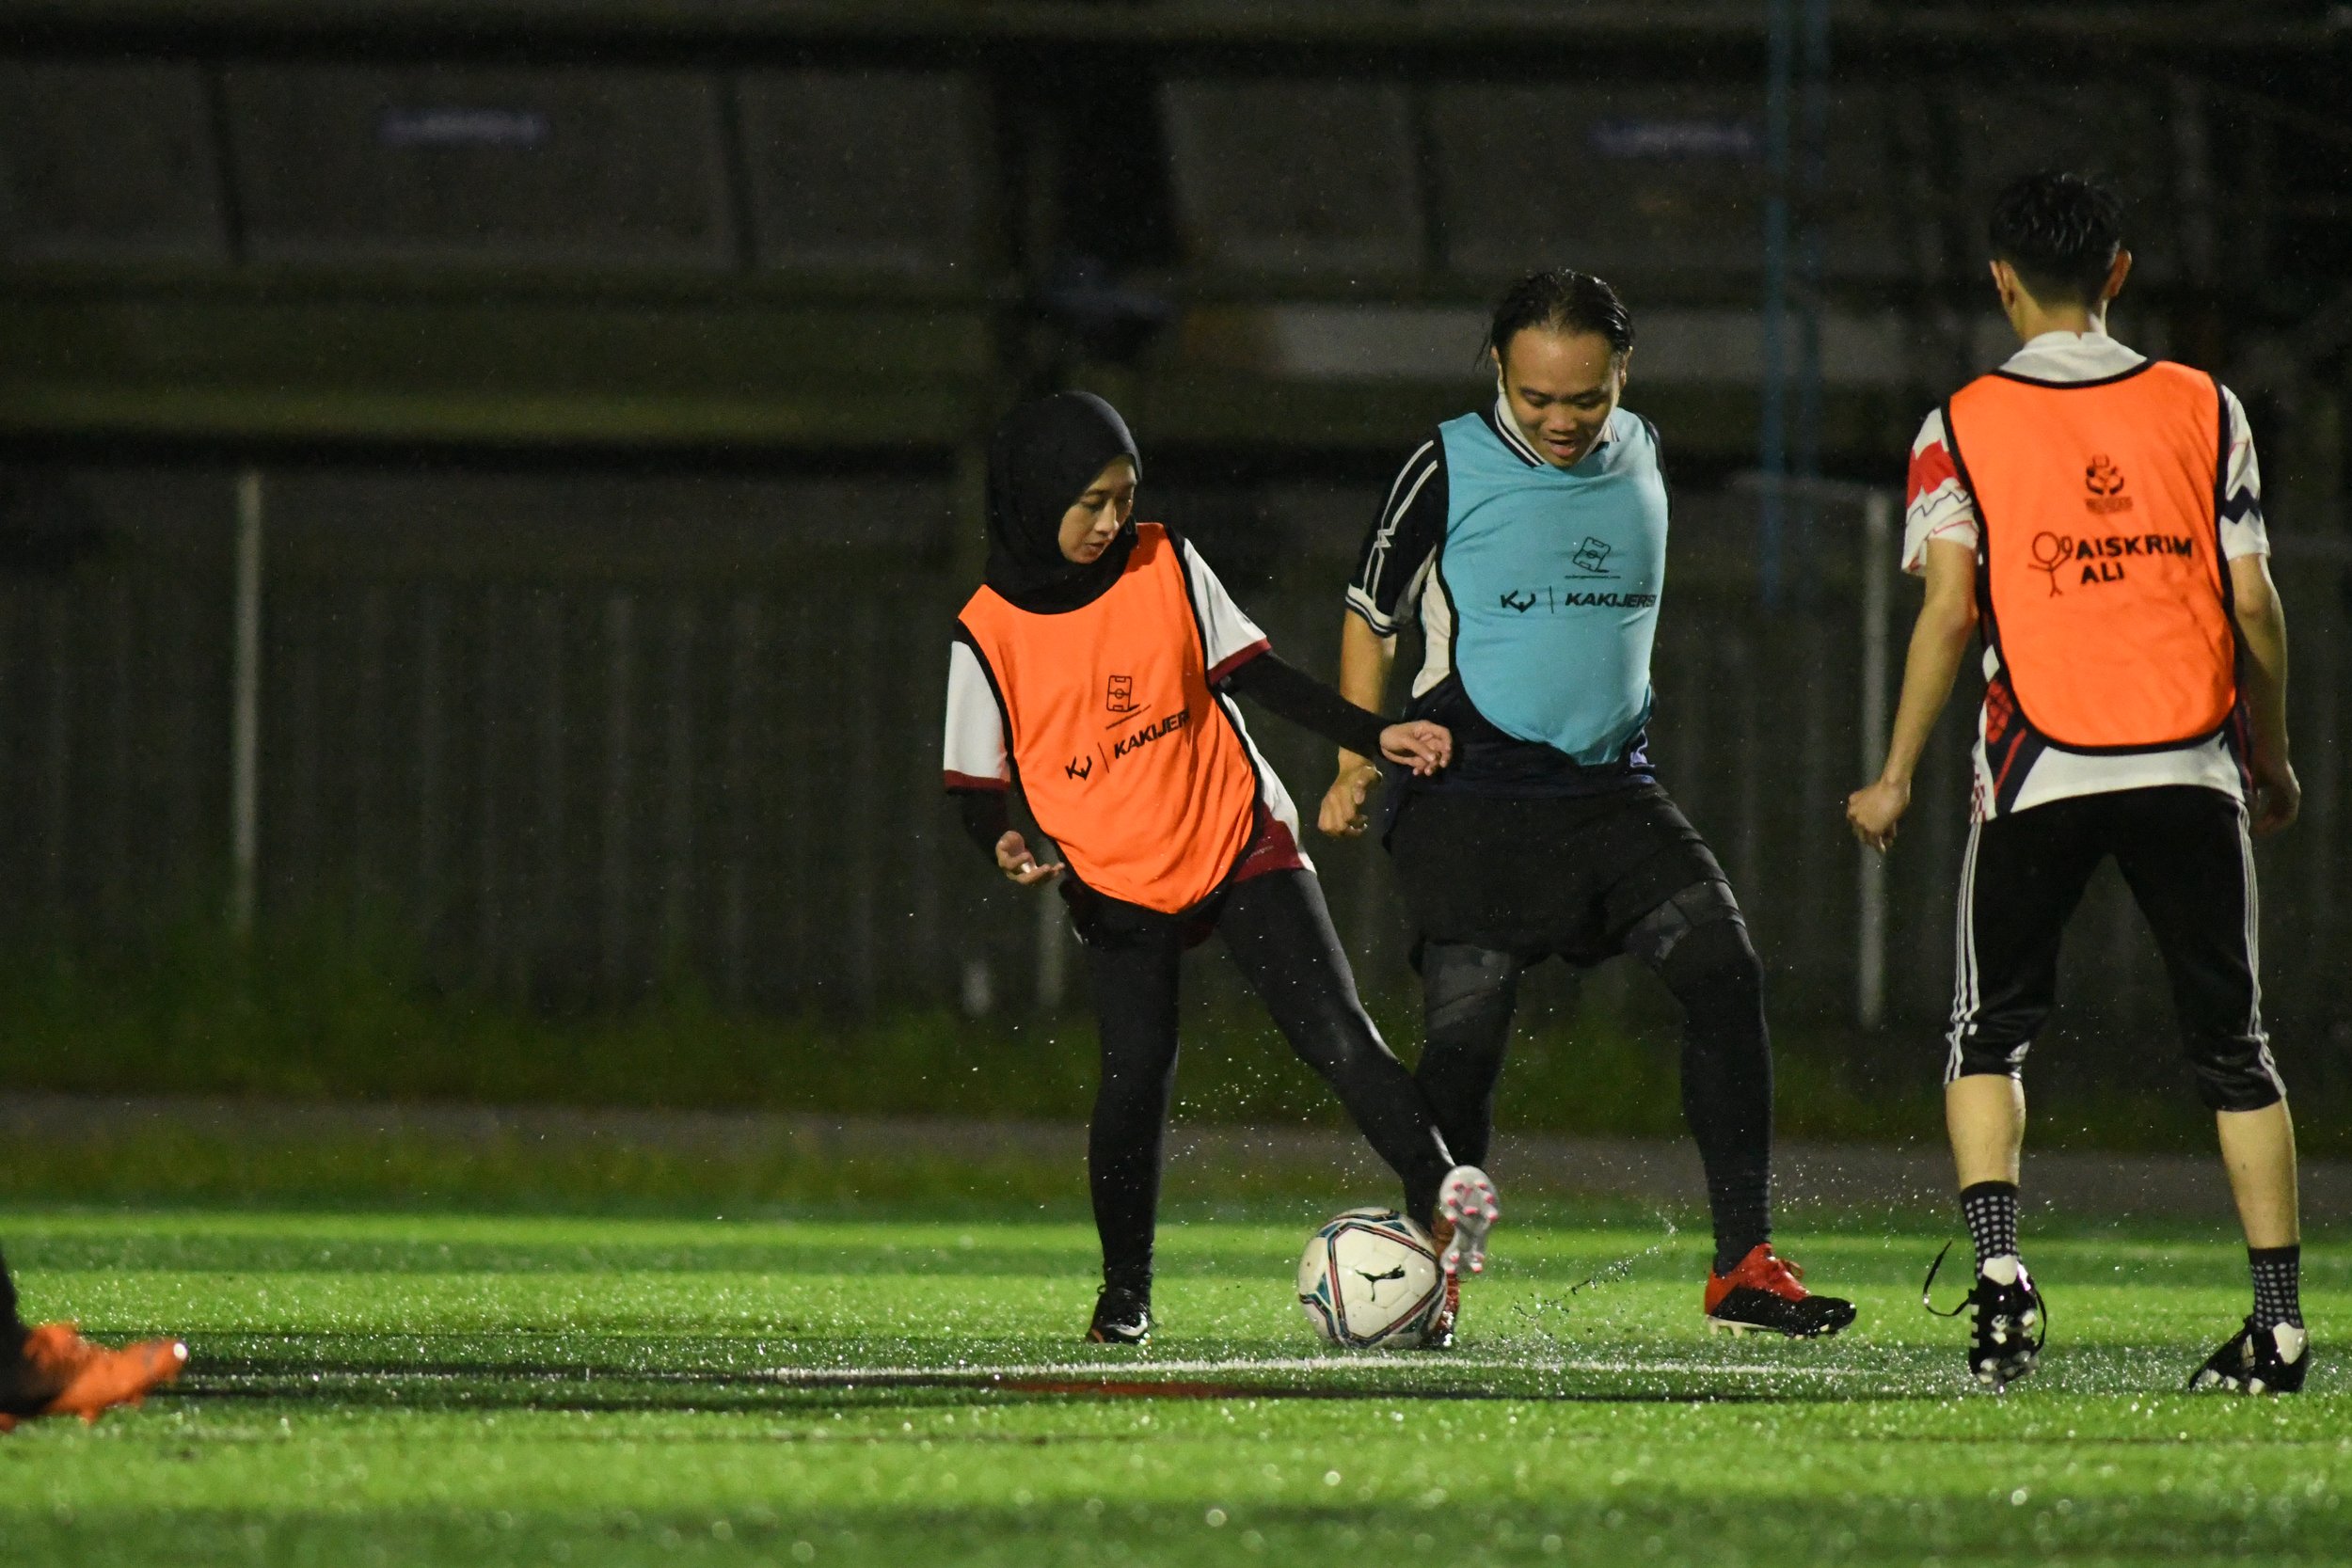 Mix Football @ Footballhub SkyArena — PadangBolaSepak